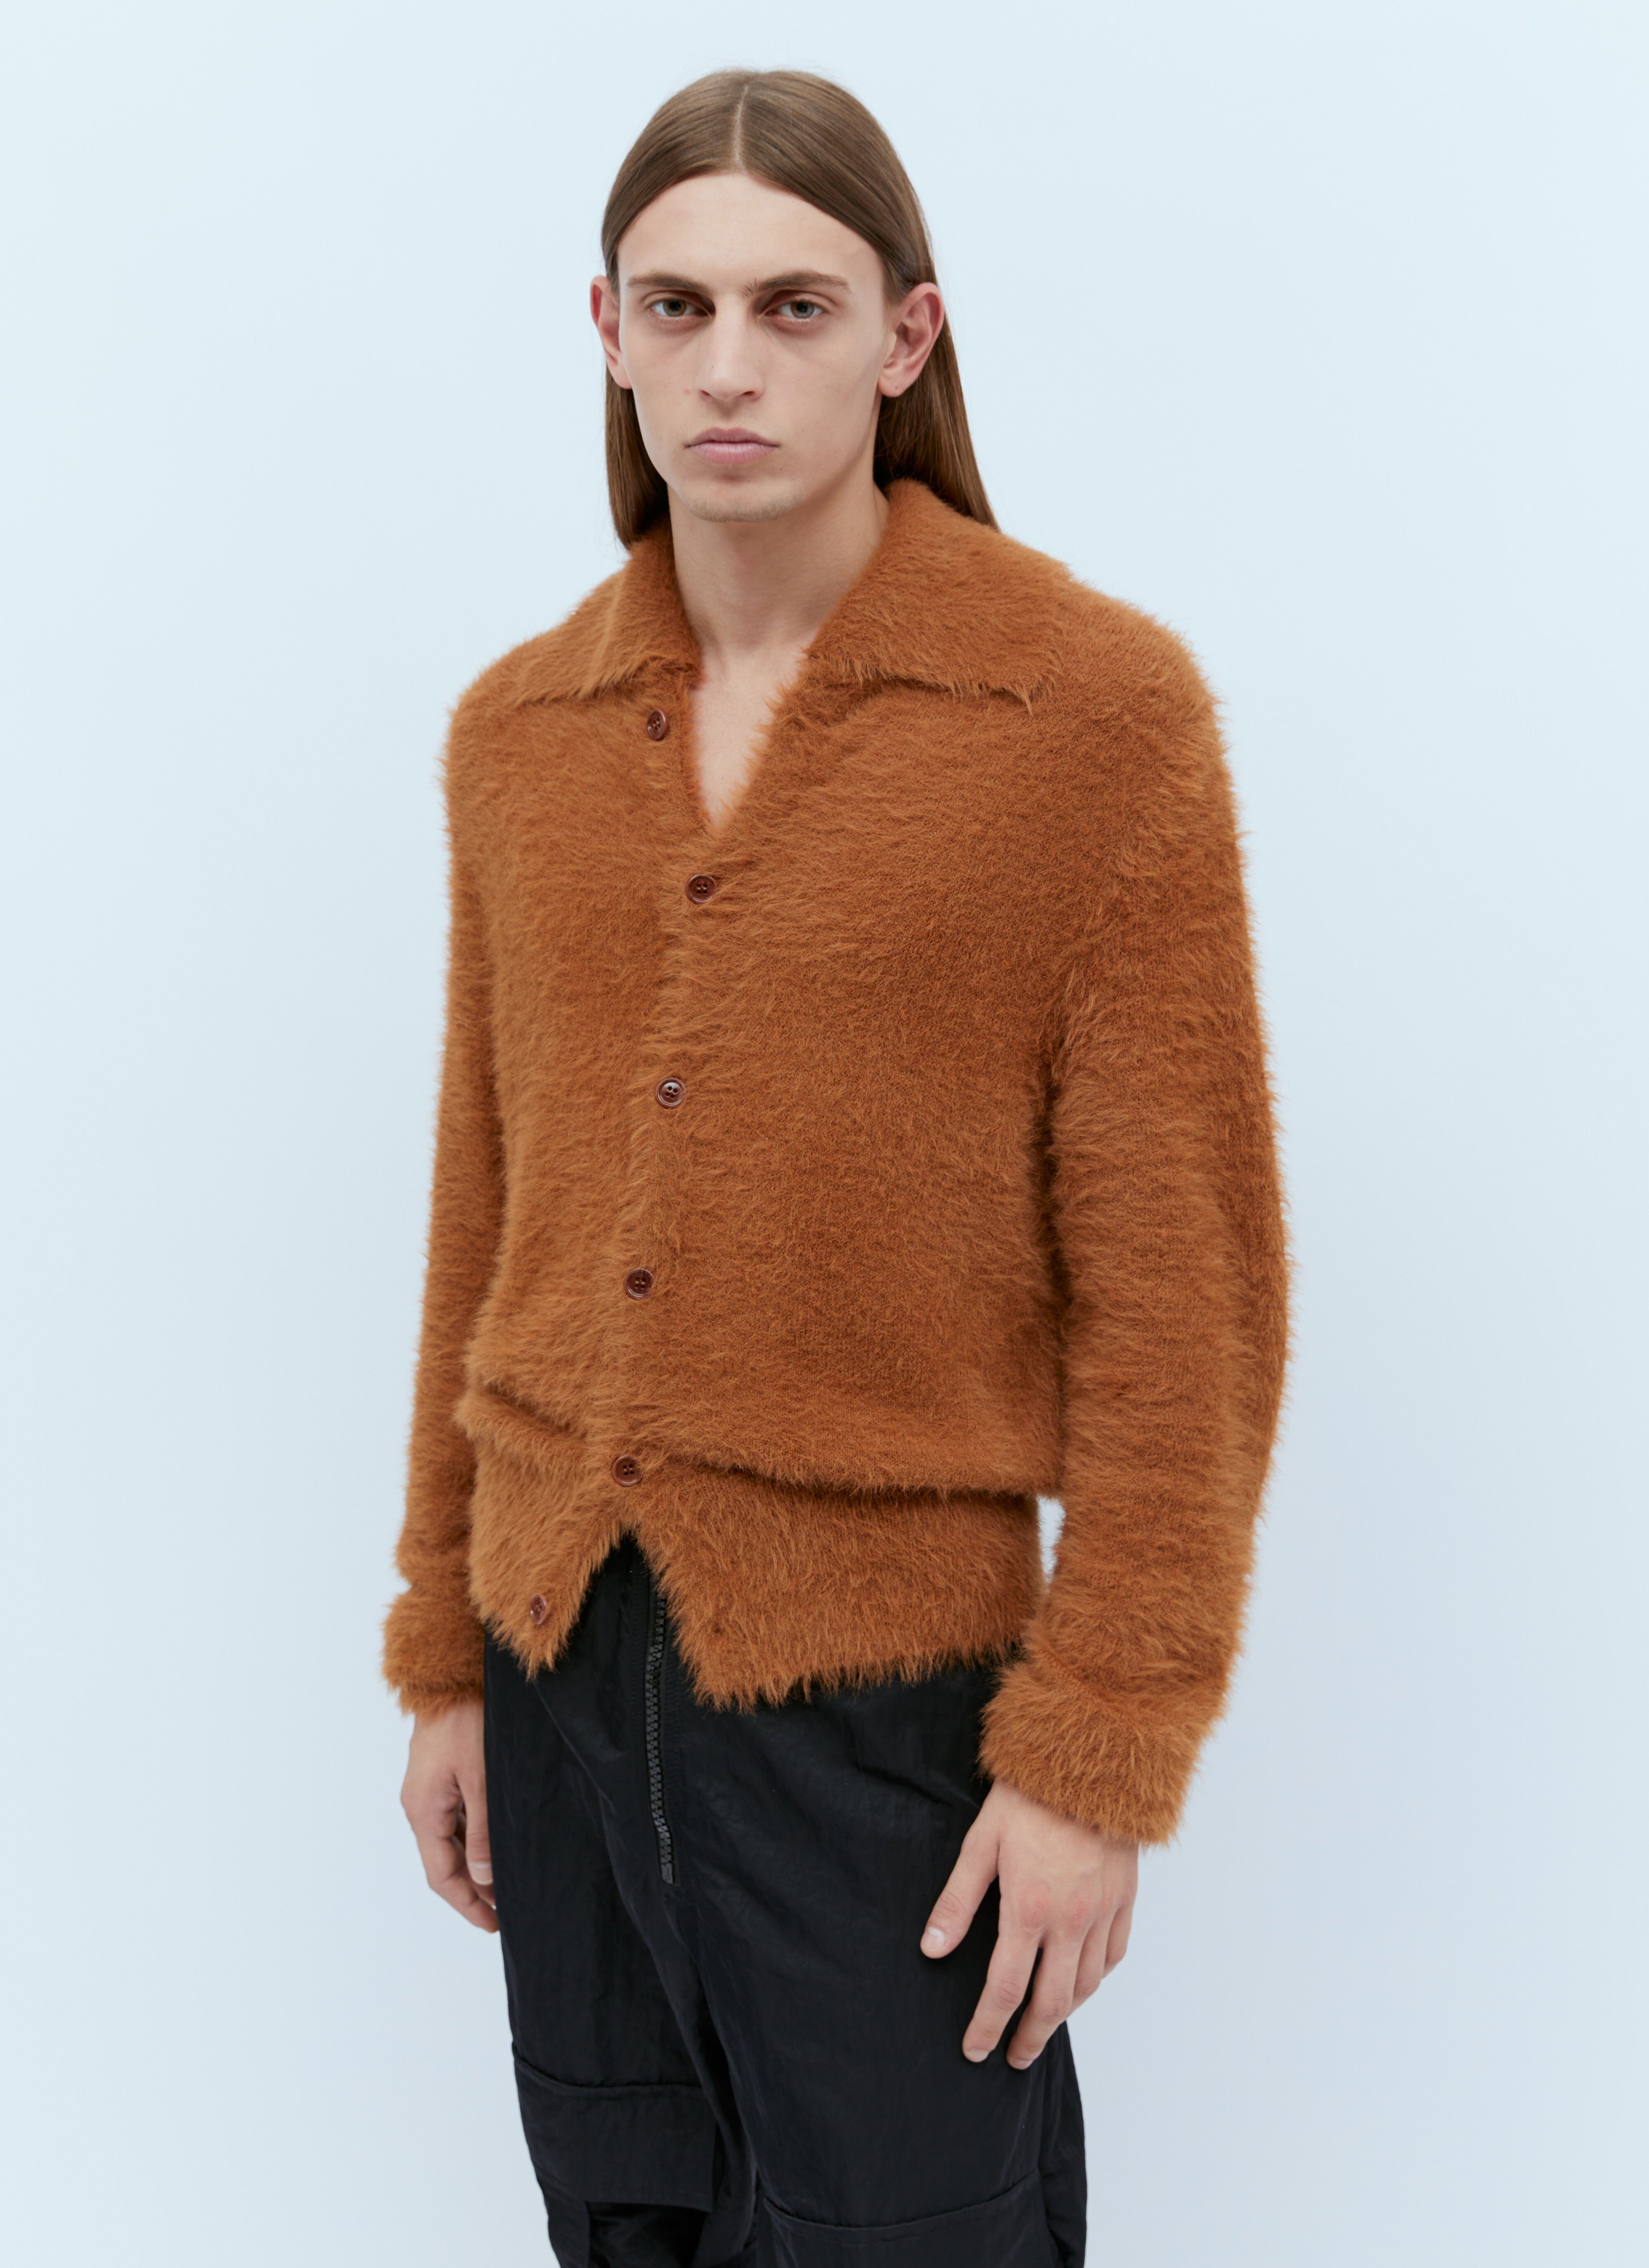 Dries Van Noten Soft-Fluffy Knit Cardigan in Camel | LN-CC®